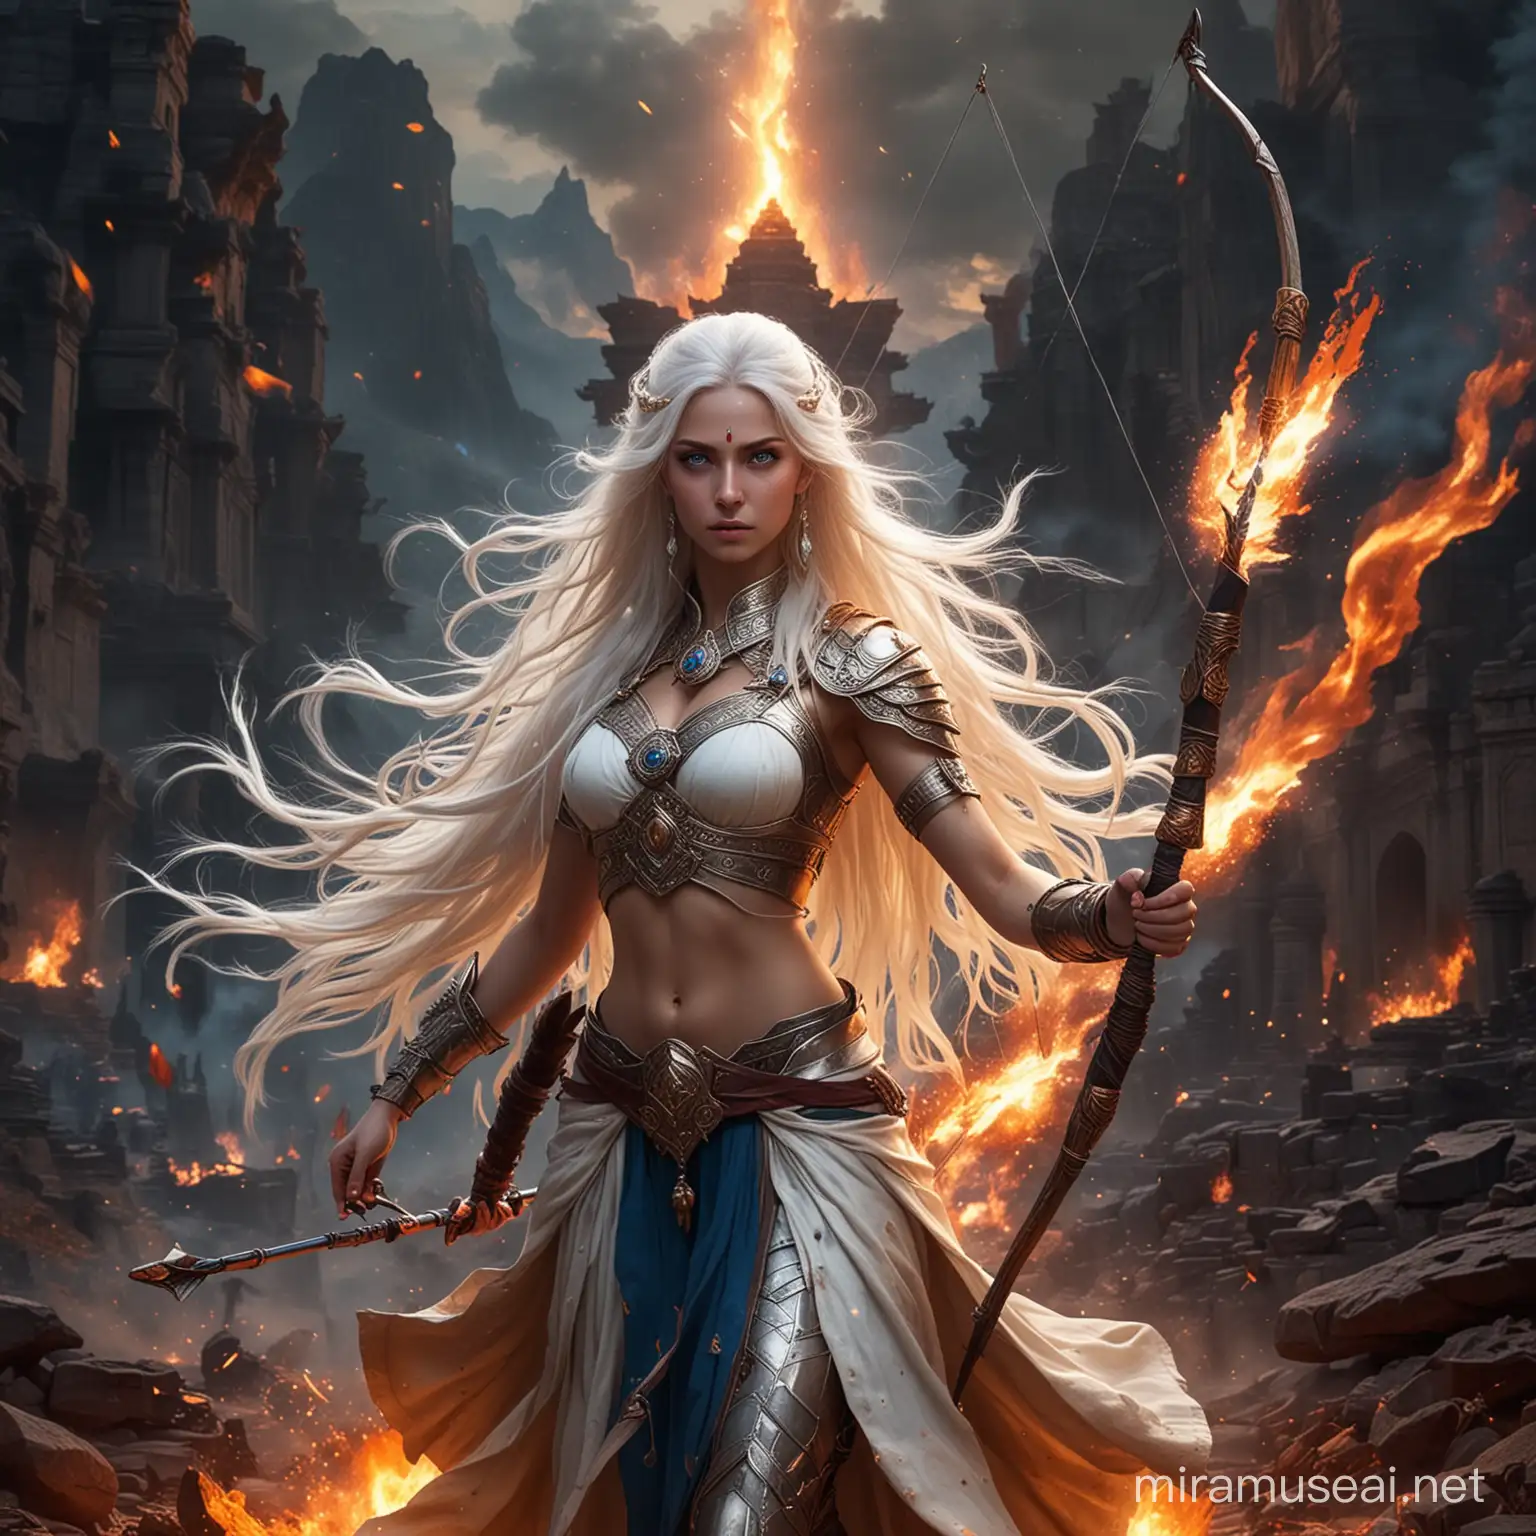 Powerful Empress Goddesses in War Attire Amidst Cosmic Fire Circles